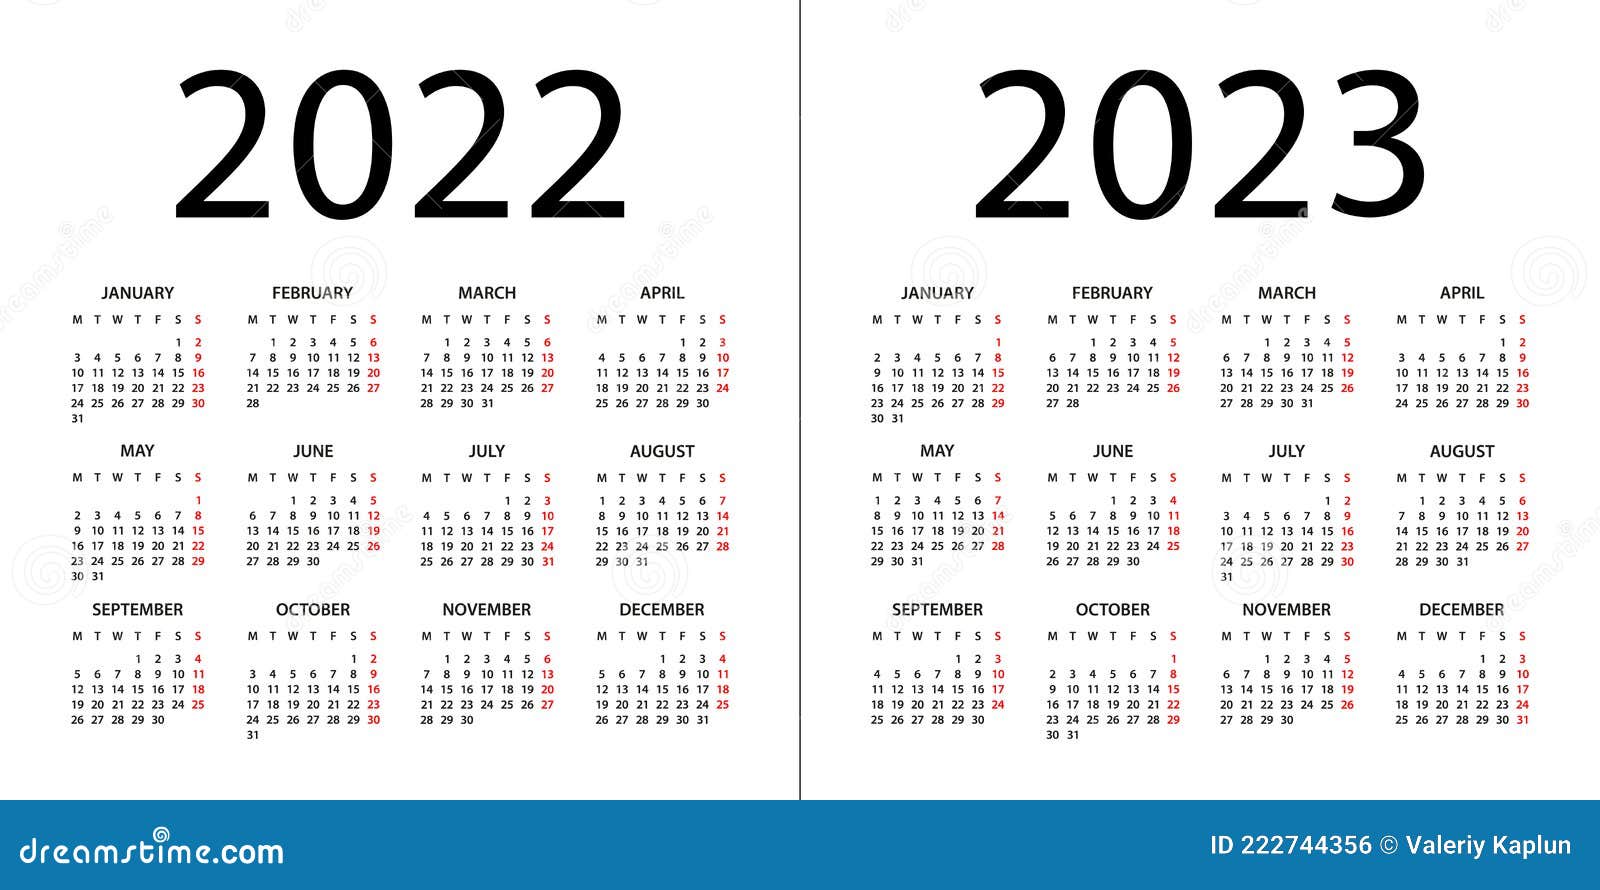 calendar-2022-2023-illustration-week-starts-on-monday-calendar-set-for-2022-2023-years